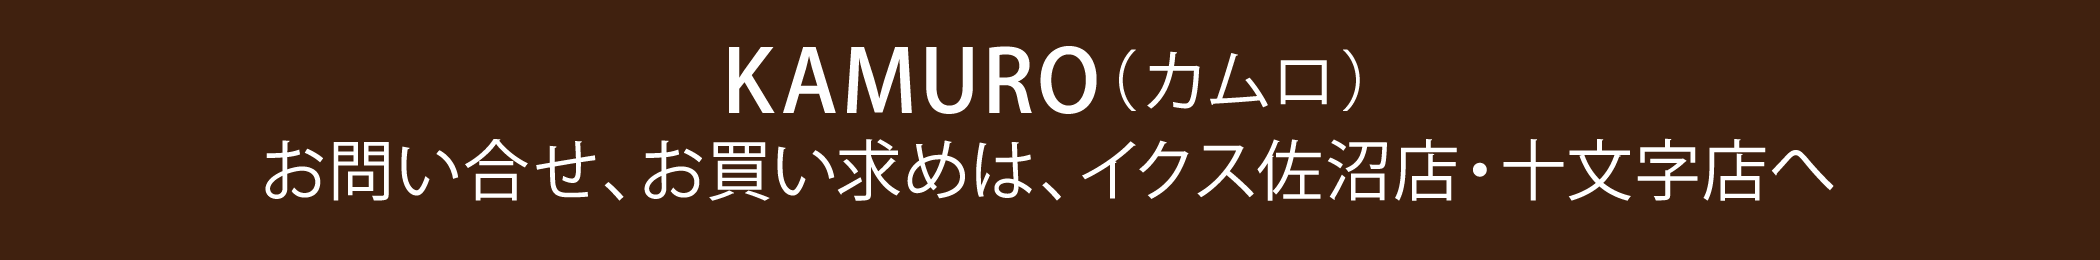 KAMURO(カムロ)のお問い合わせ、お買い求めは、イクス佐沼店・十文字店へ